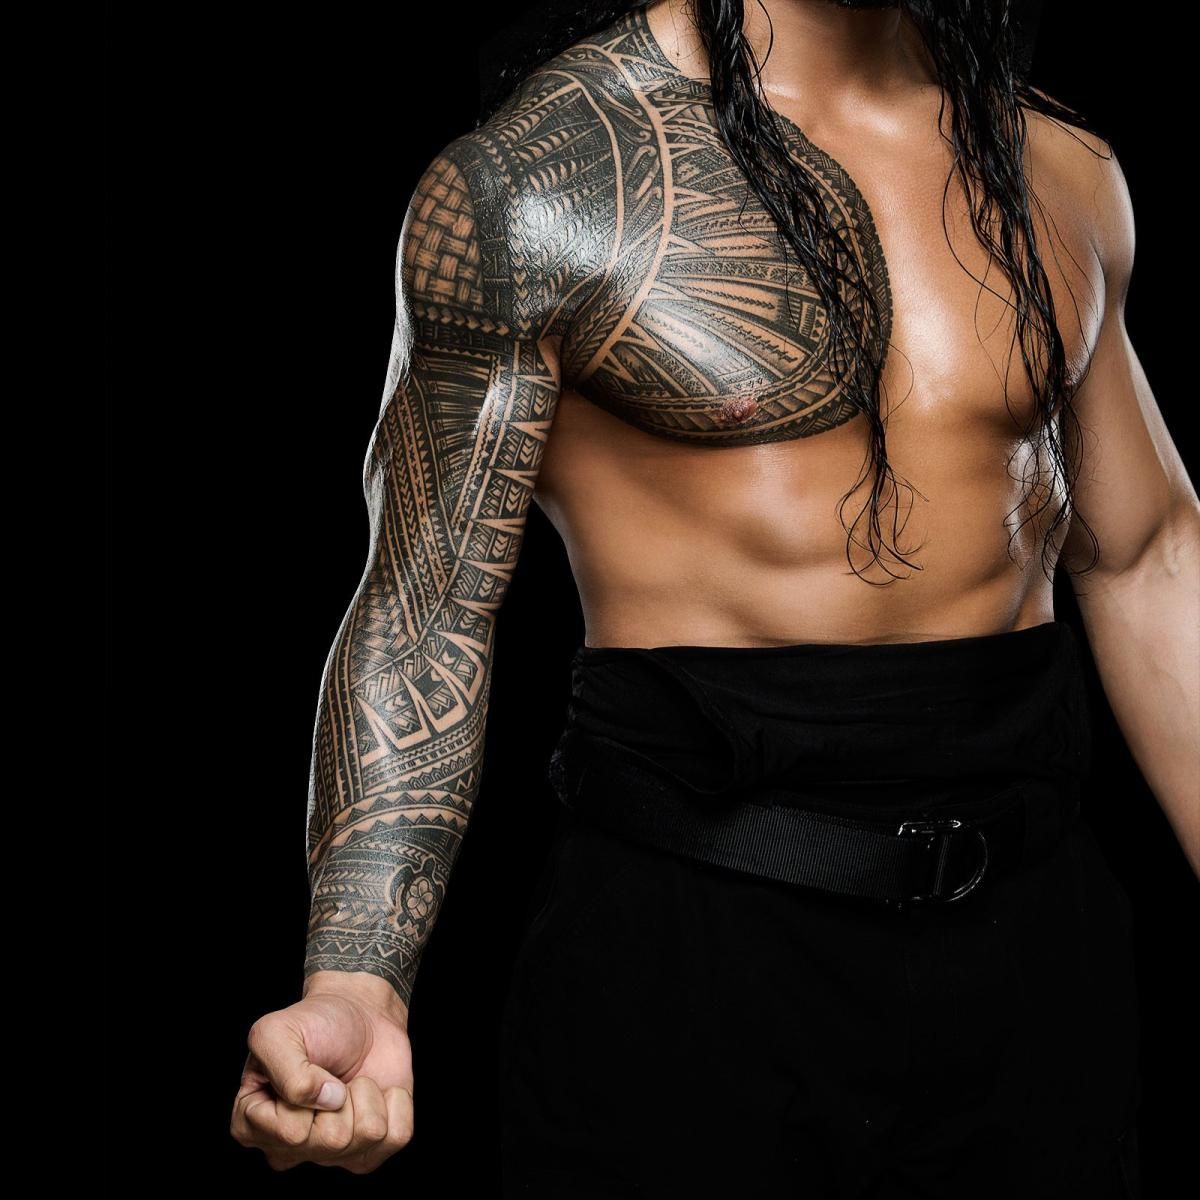 Roman Reigns enhanced tattoo sleeve WWE done by tattoo artist Mike Fatutoa